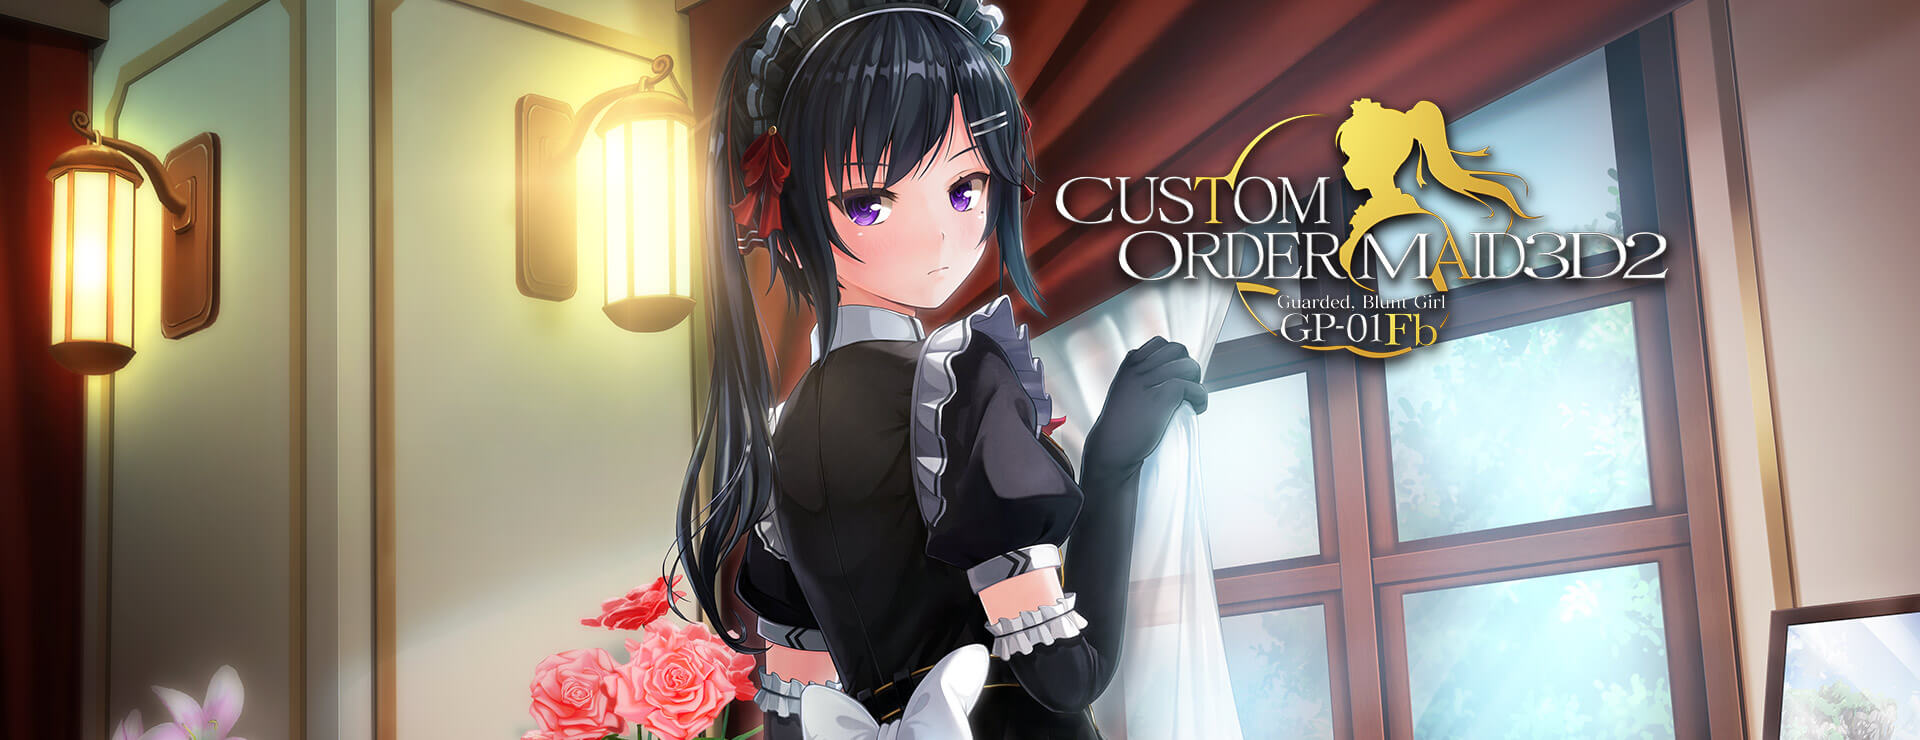 Custom Order Maid 3D2 Guarded, Blunt Girl GP-01fb DLC - Simulation Game